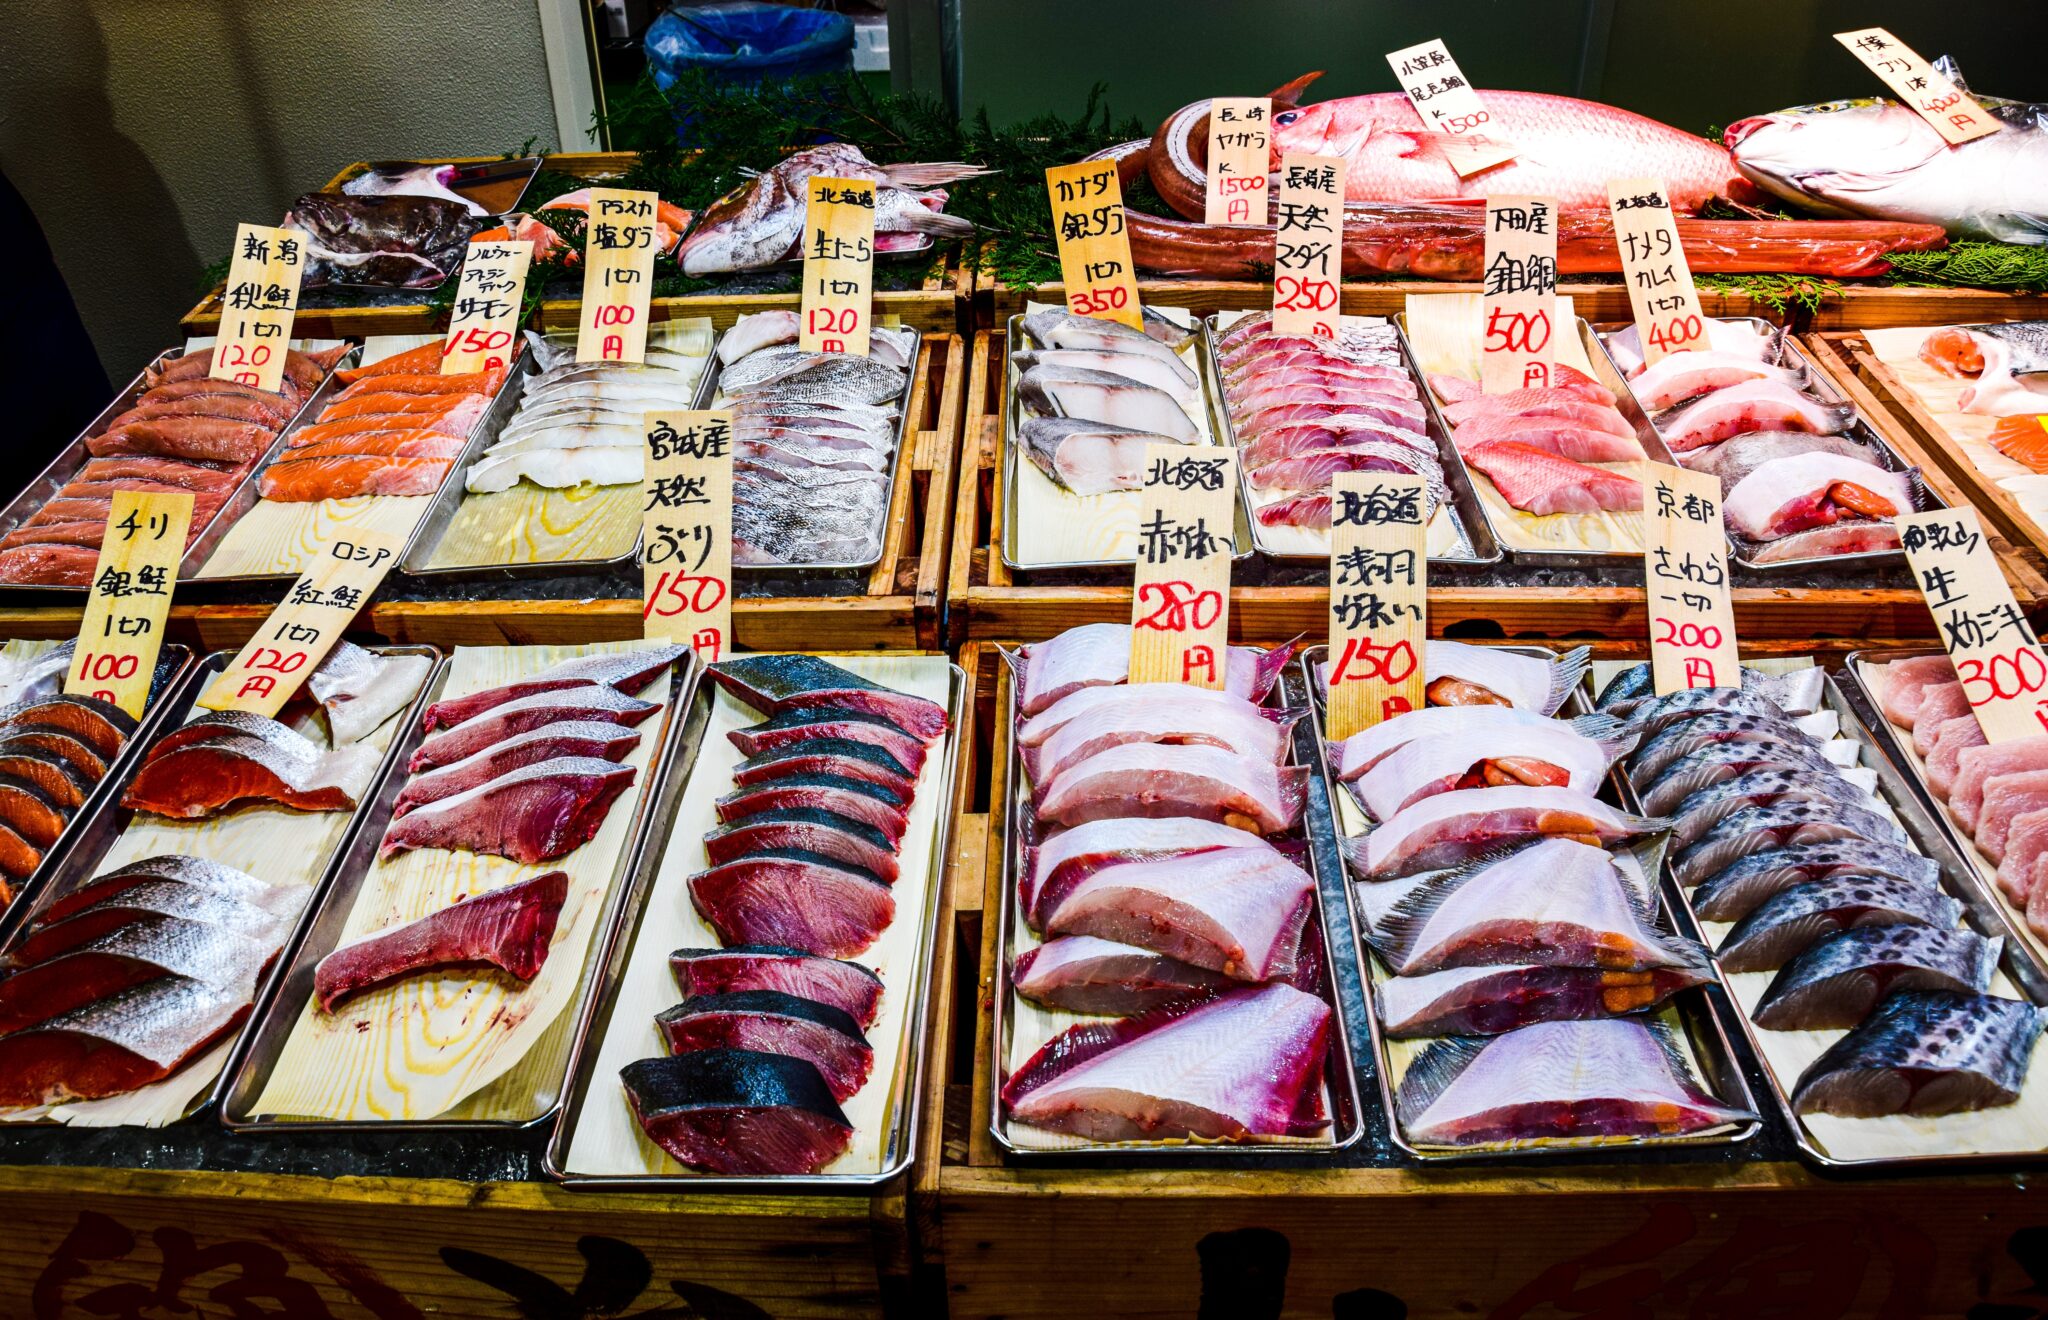 Tsukiji Fish Market Featured Image